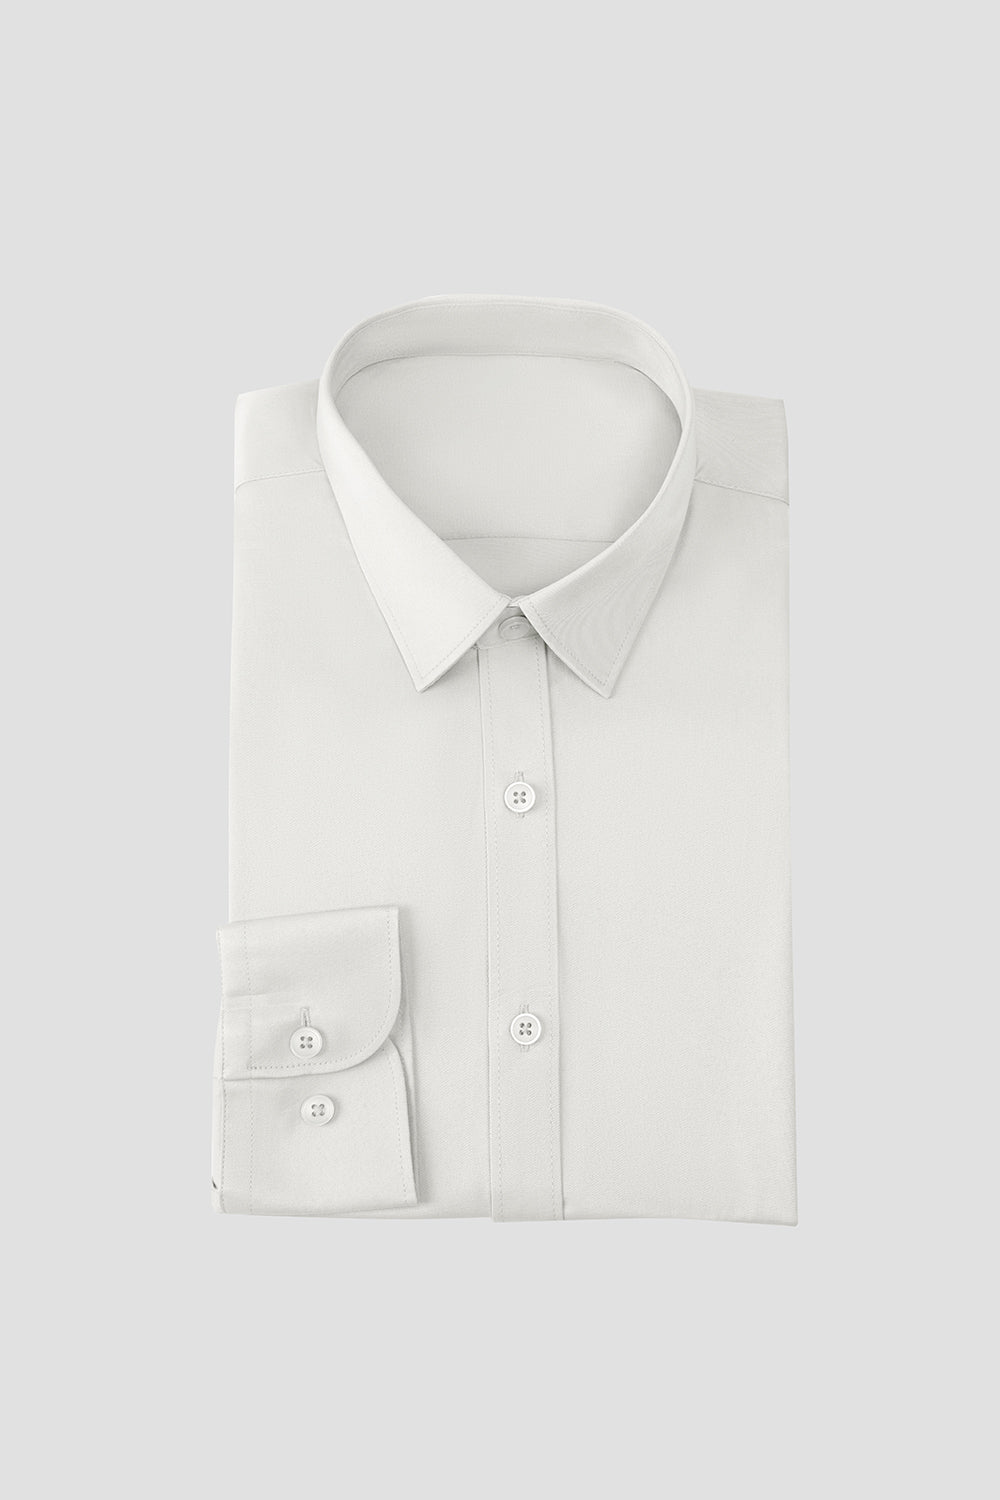 White Men's Long Sleeves Suit Shirt